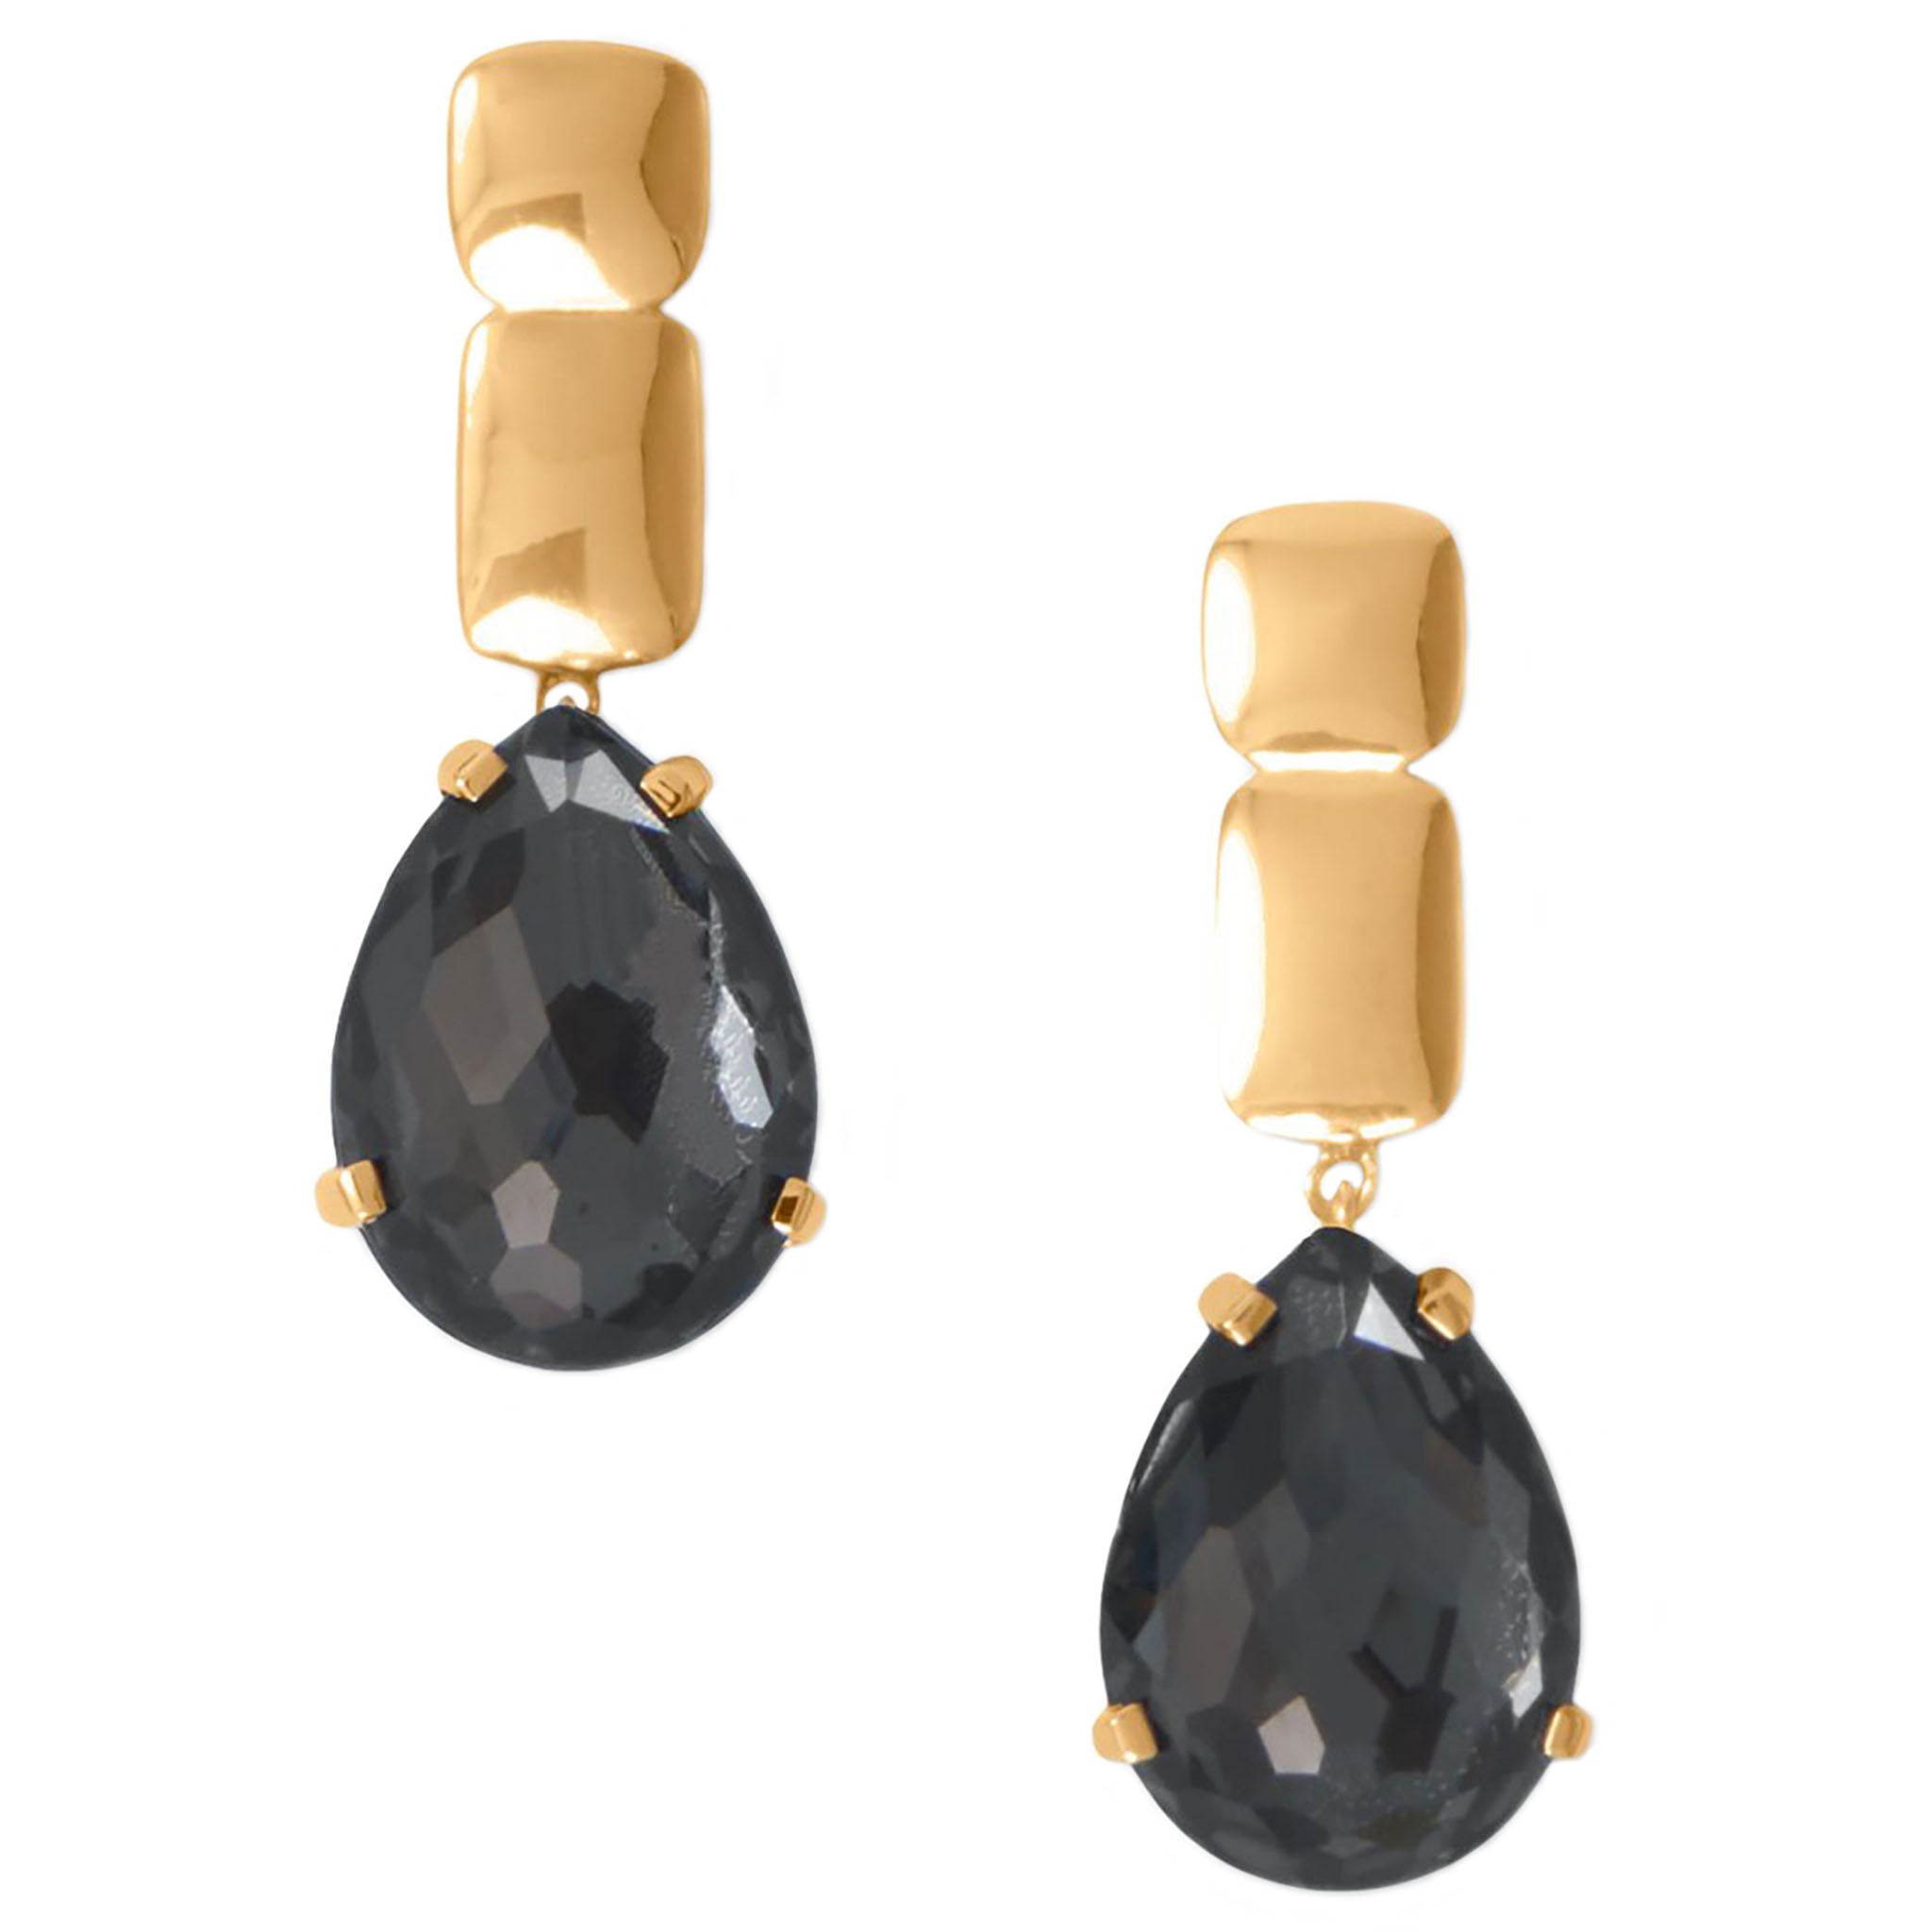 Hematite and Quartz Doublet Earrings